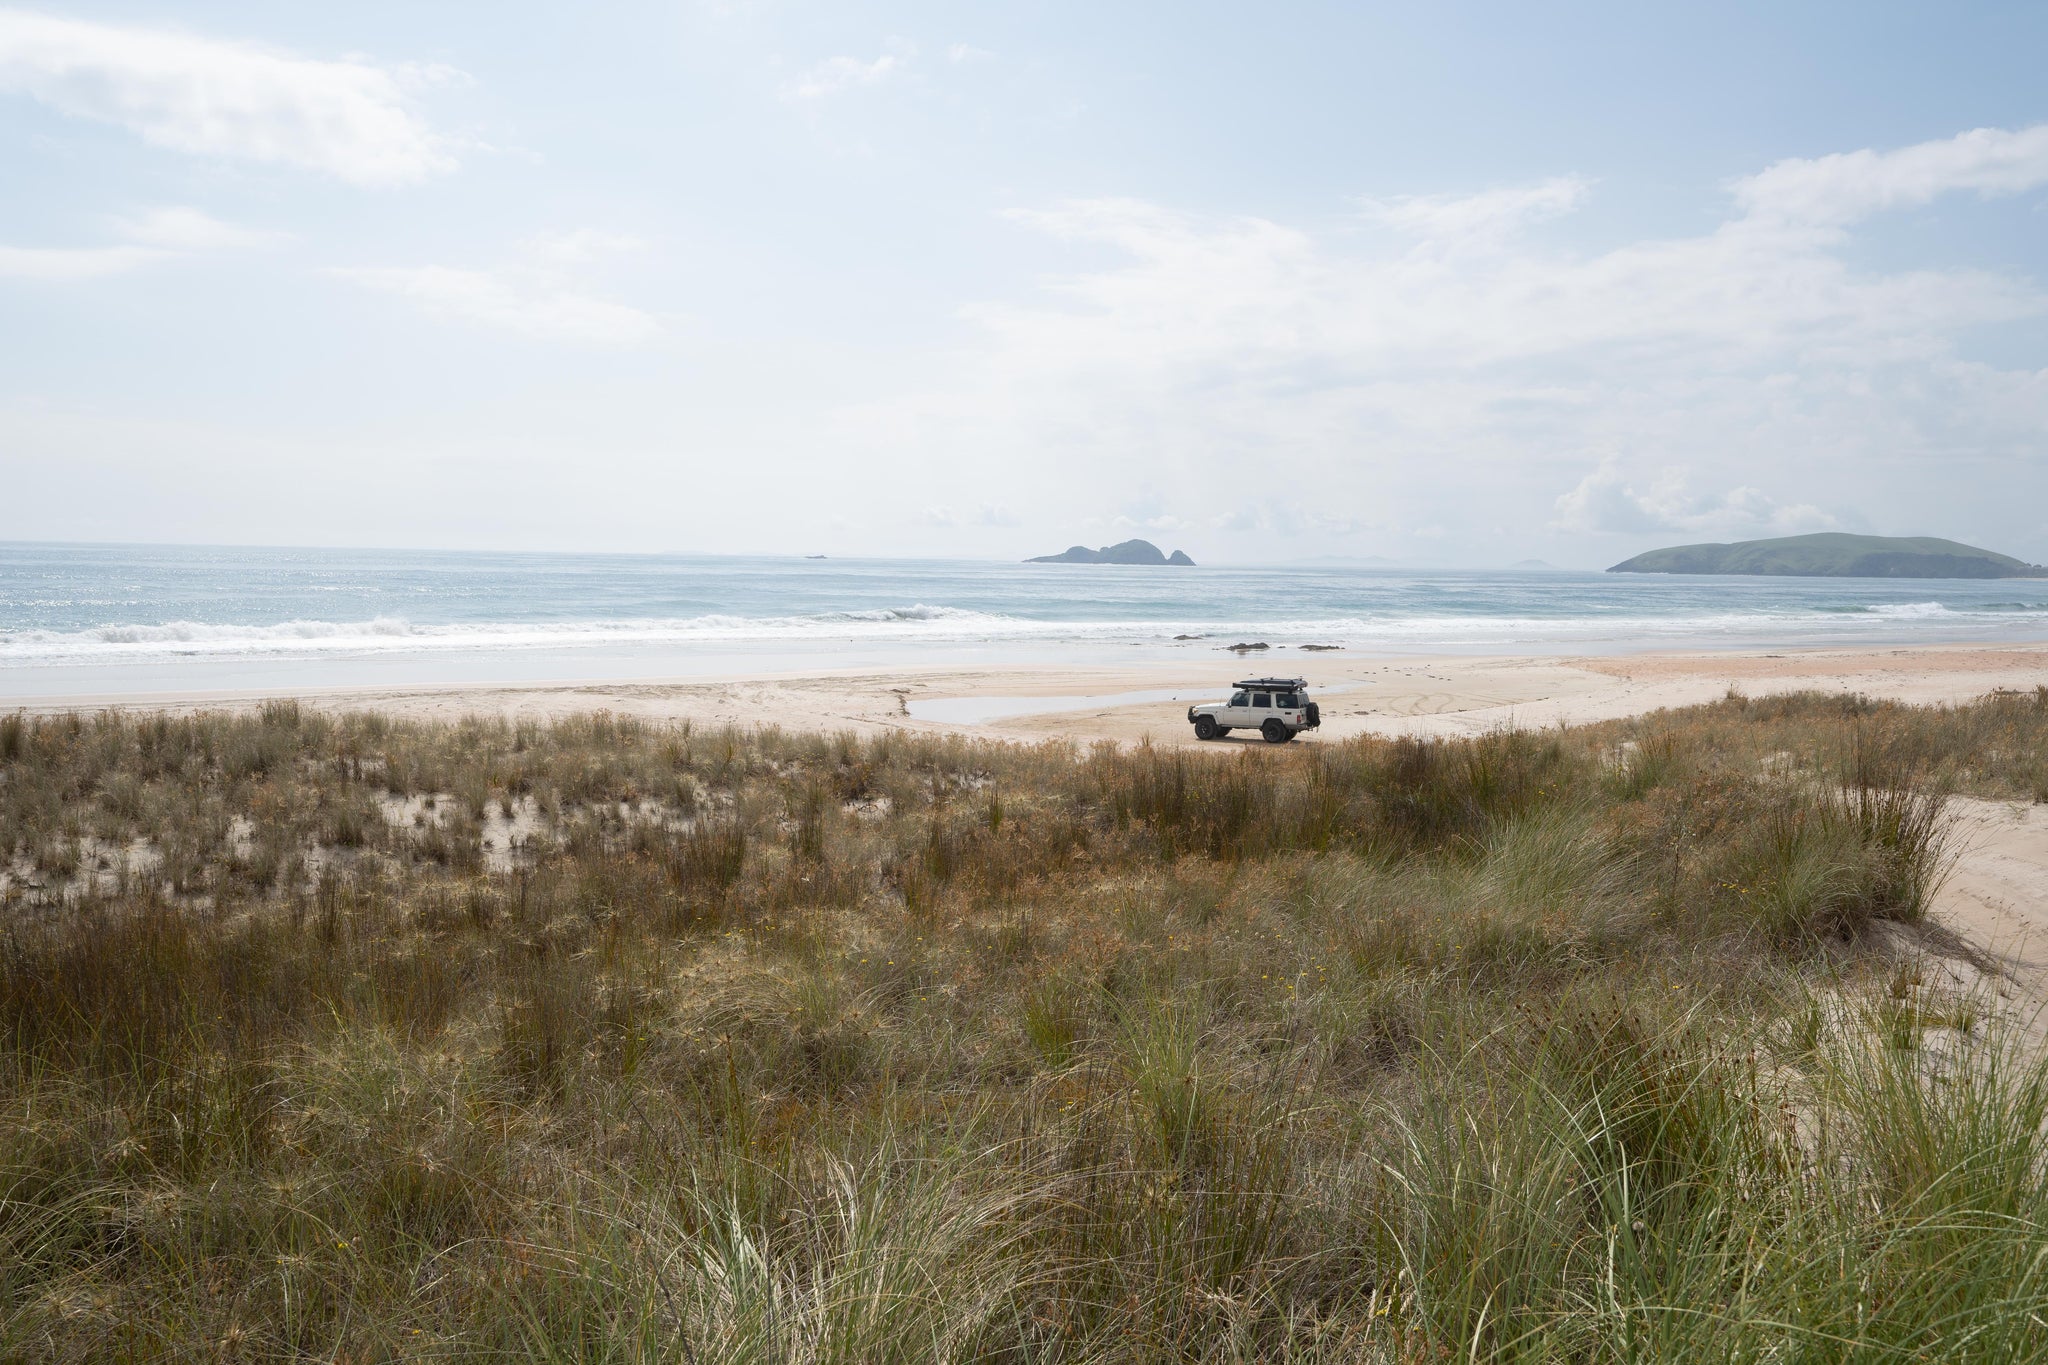 Remote 4wd beach with Landcruiser 76